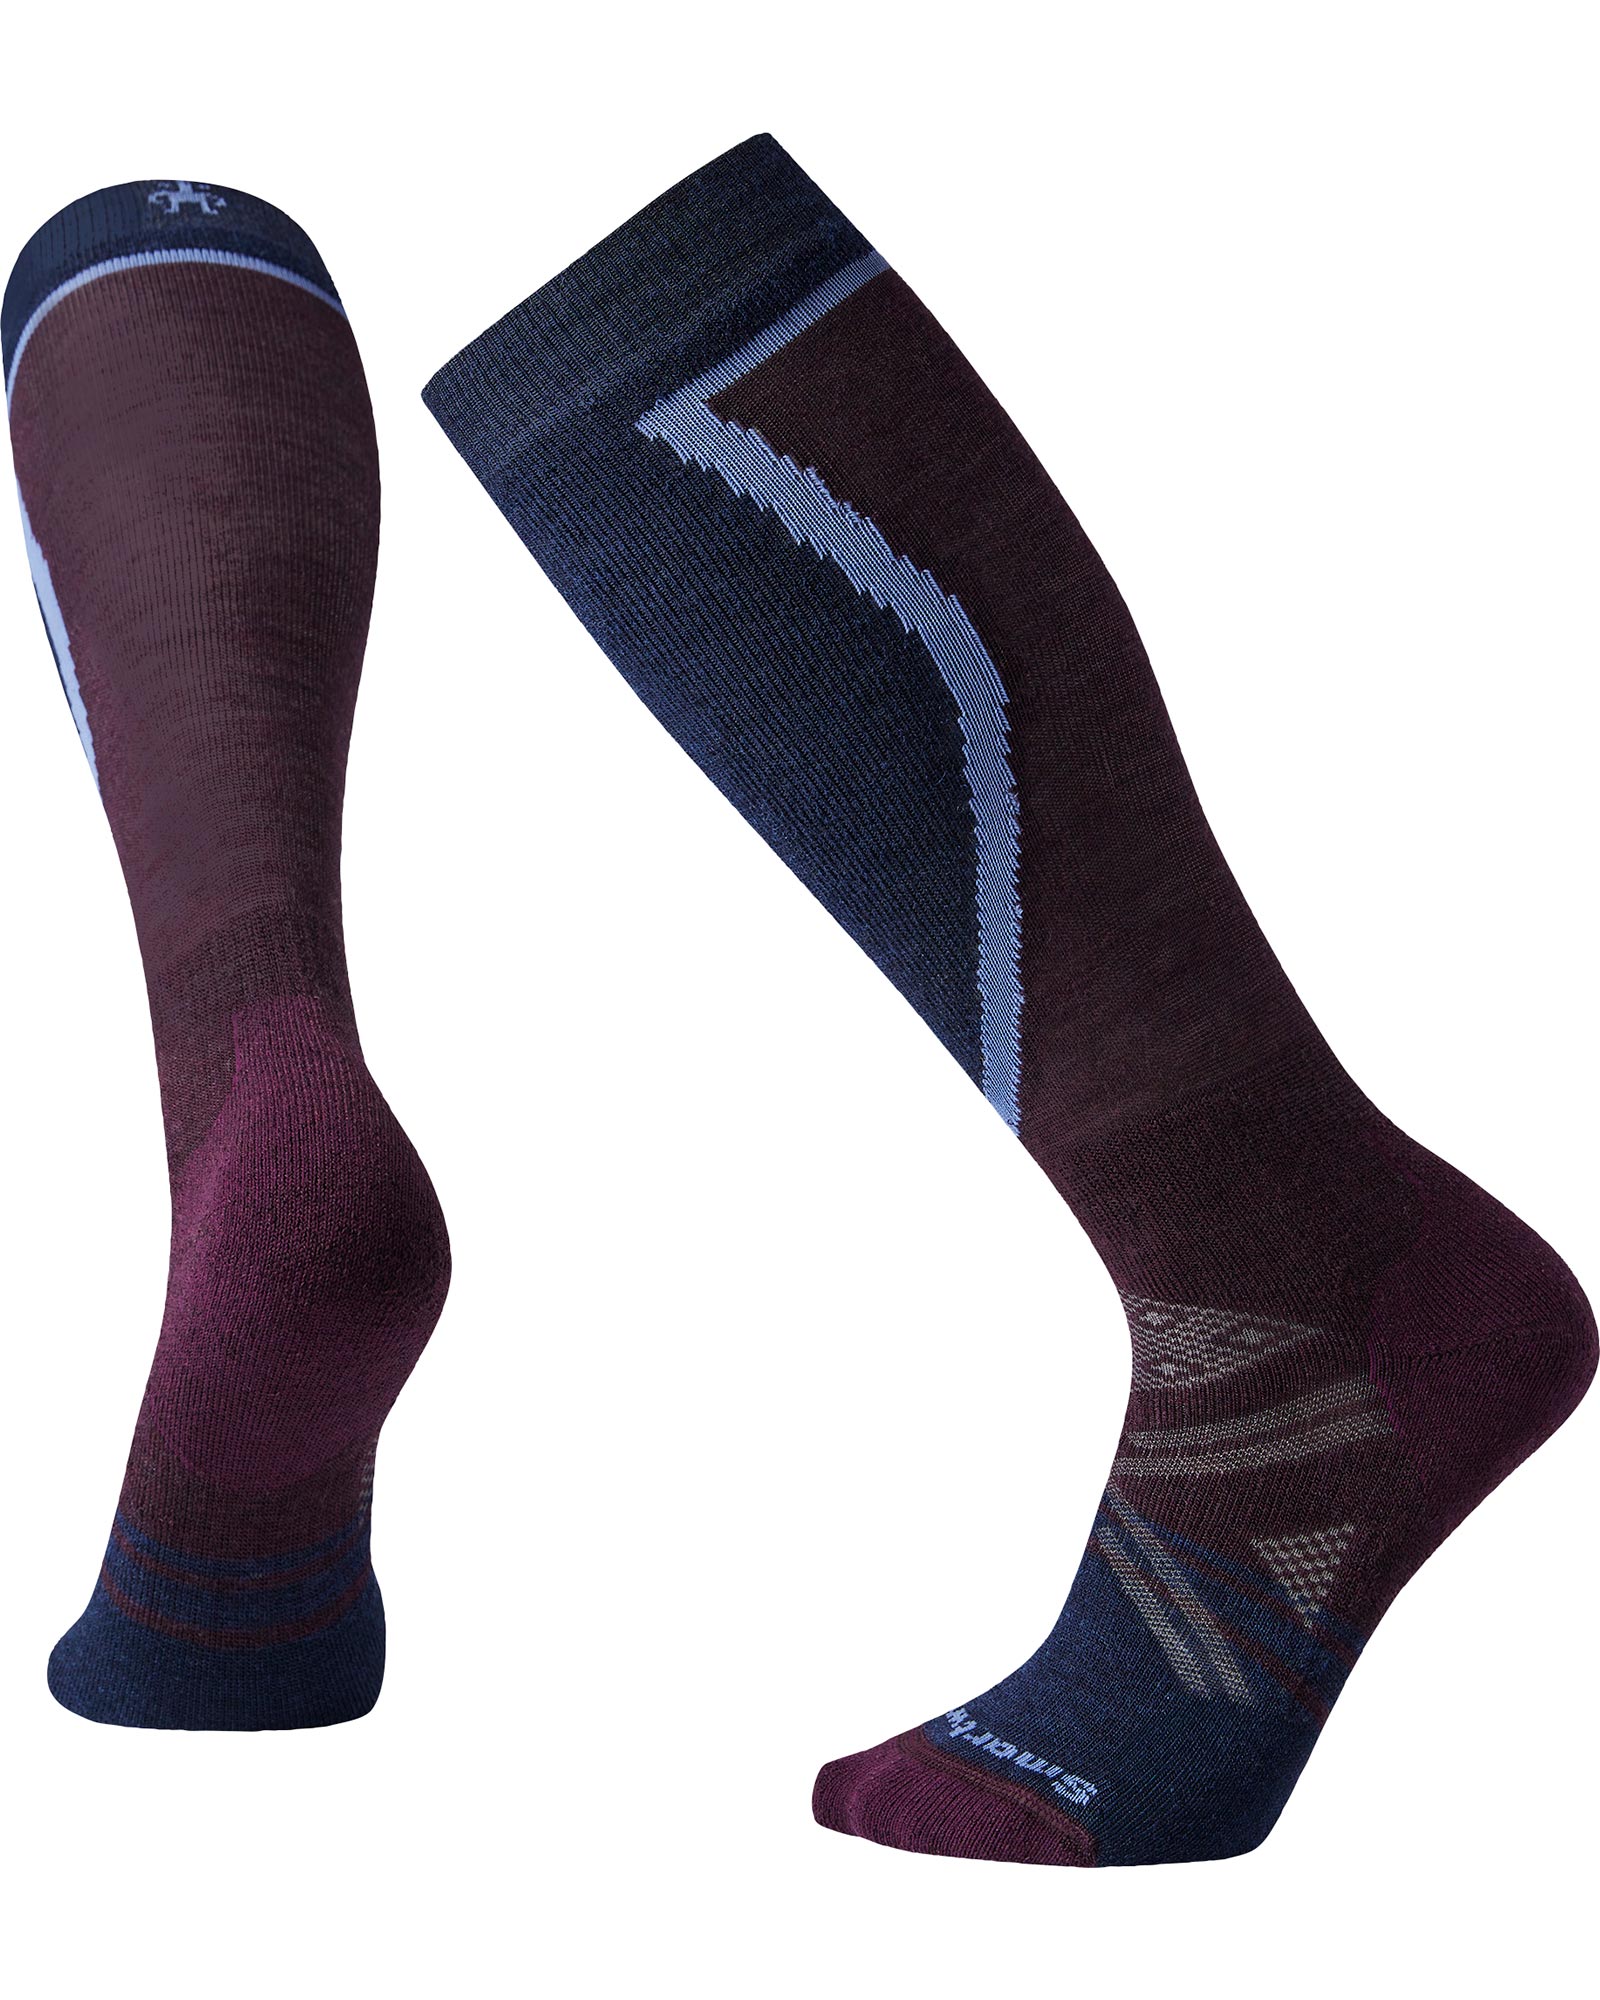 Smartwool Women's Merino PhD Ski Medium Socks